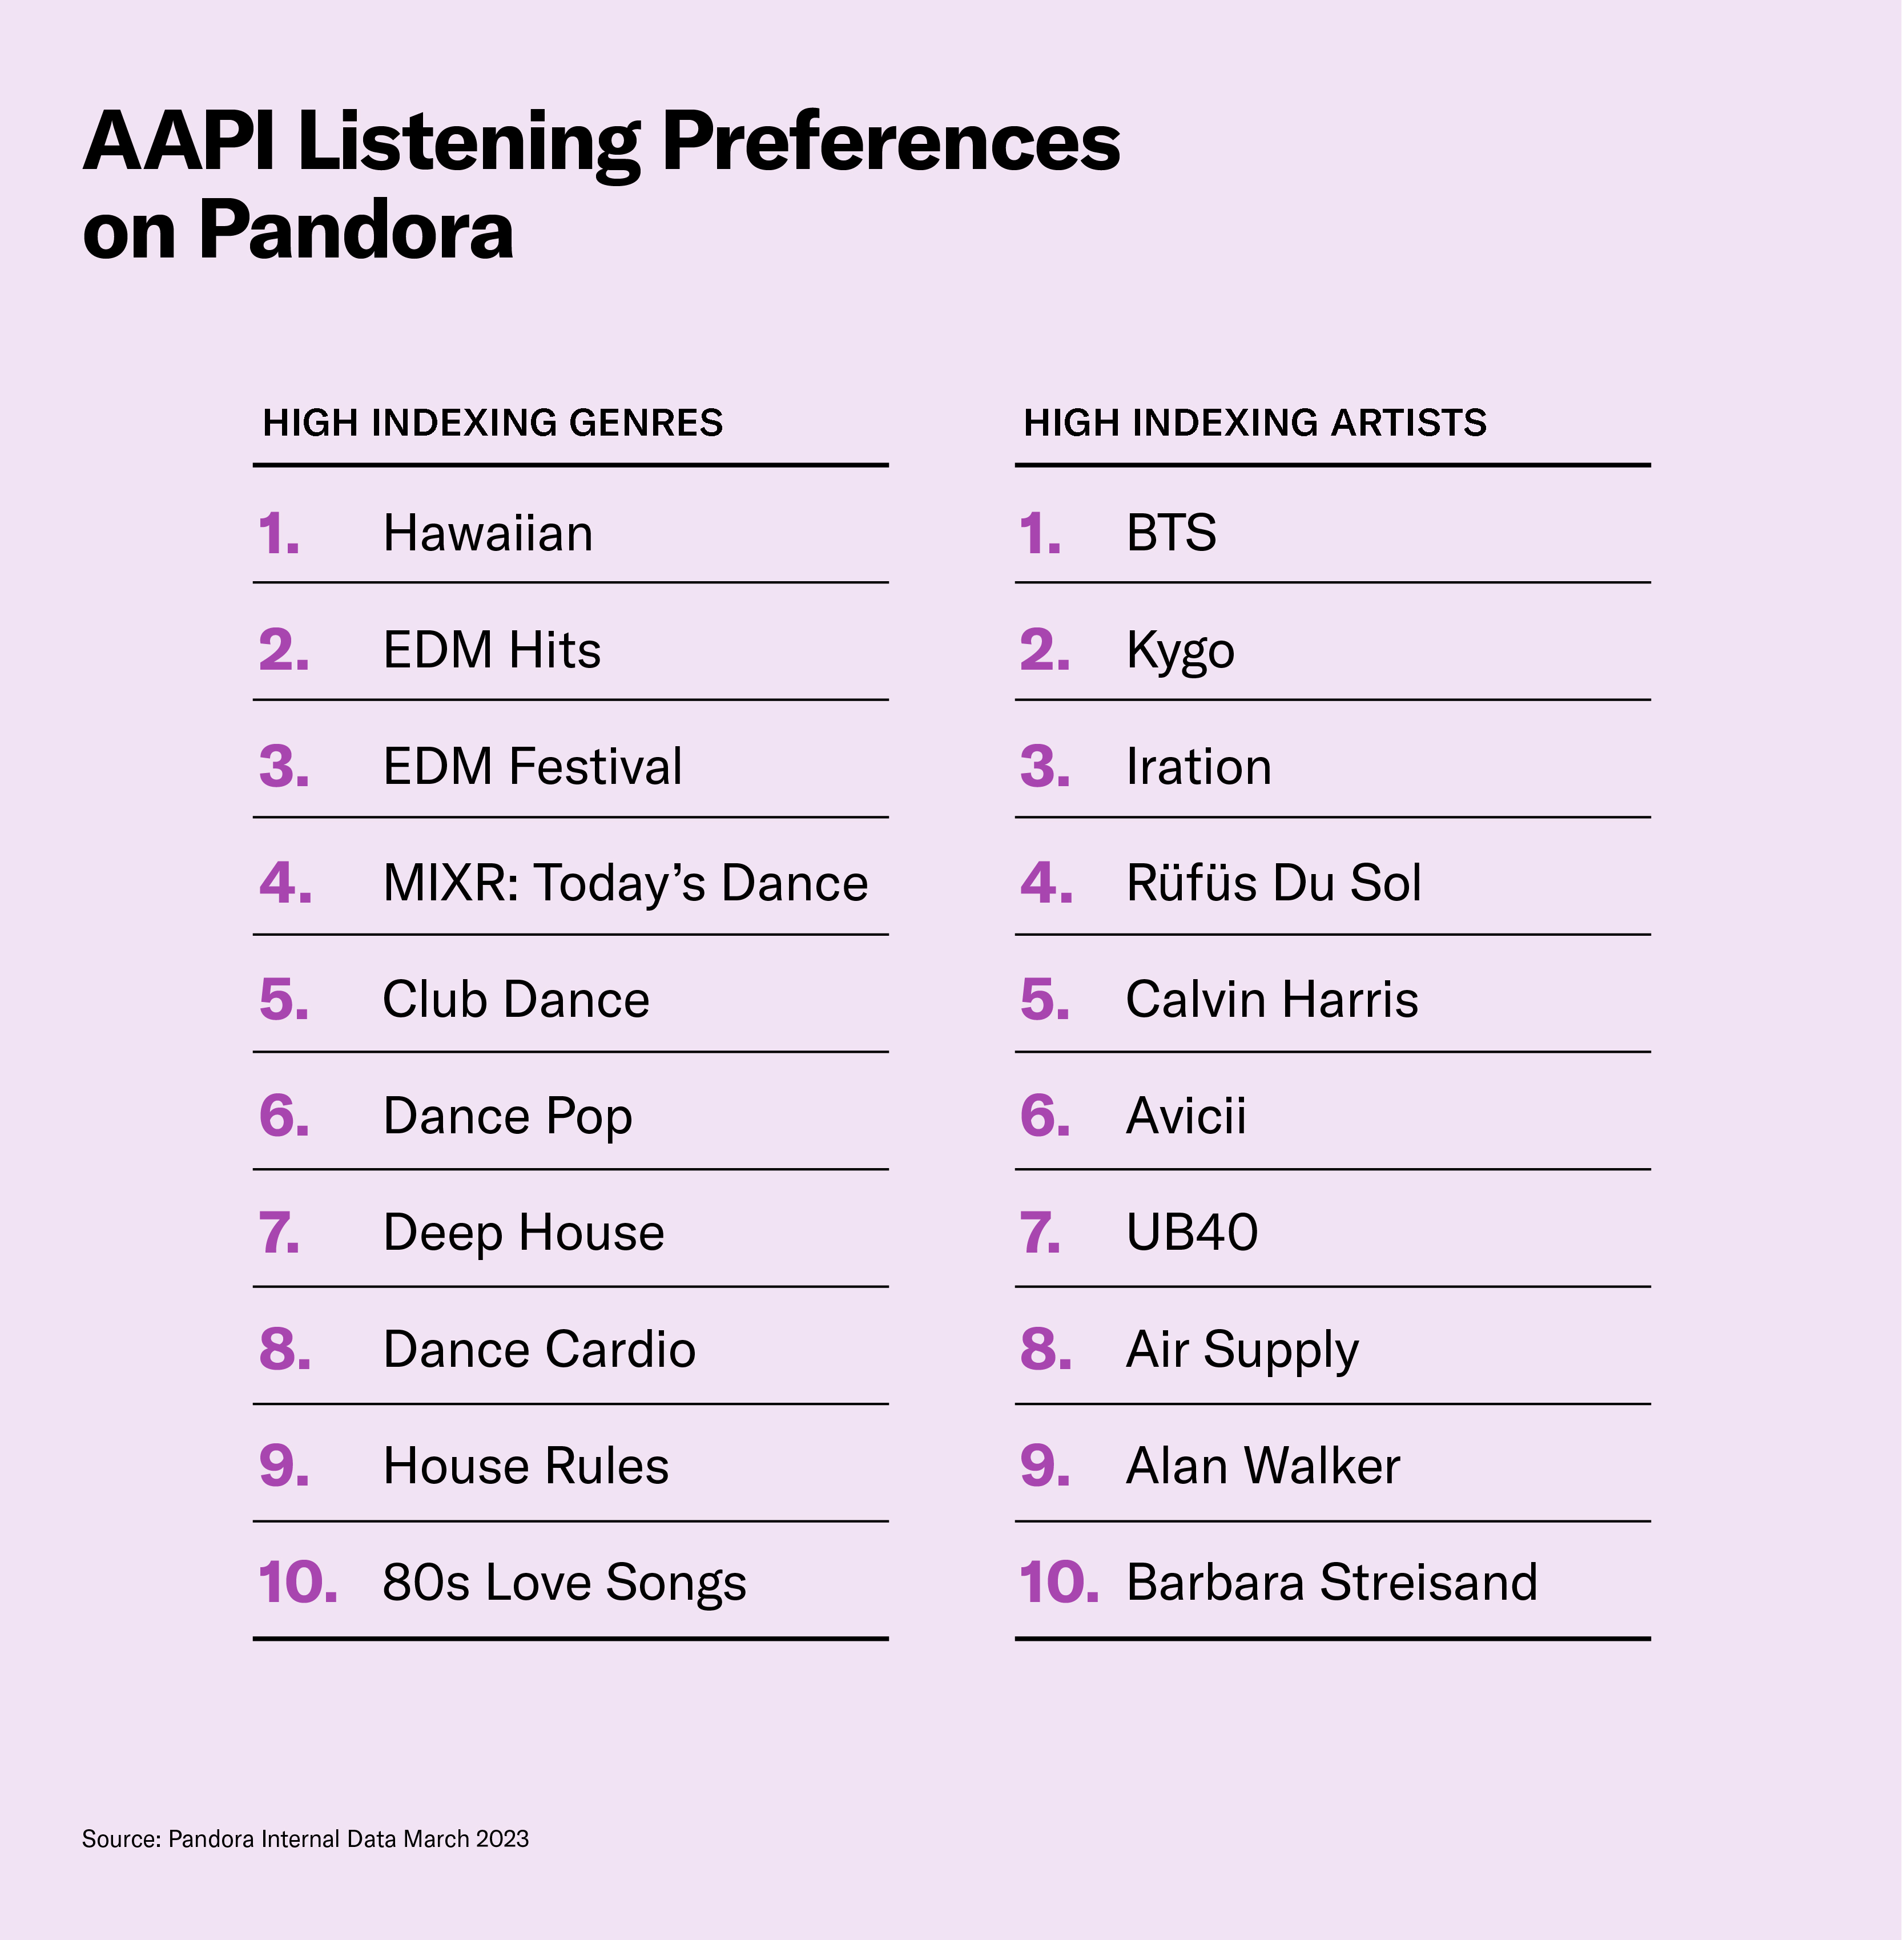 AAPI listening preferences on Pandora